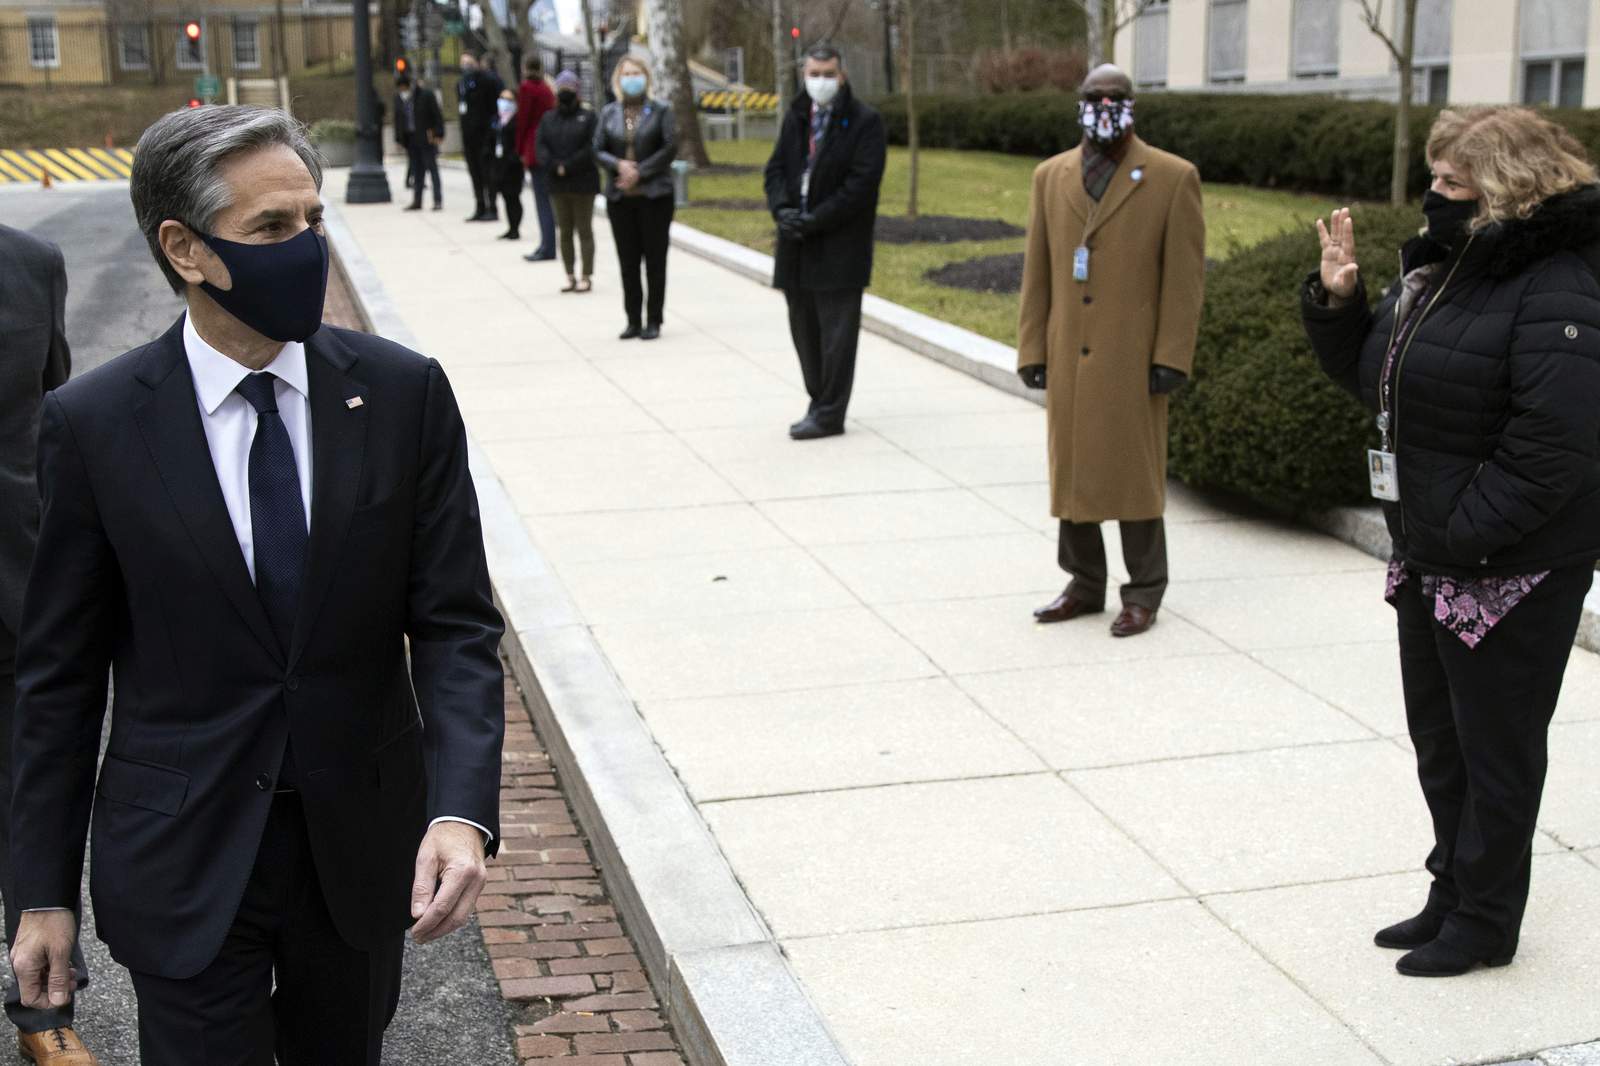 Biden presses Iran diplomacy as new special envoy tapped